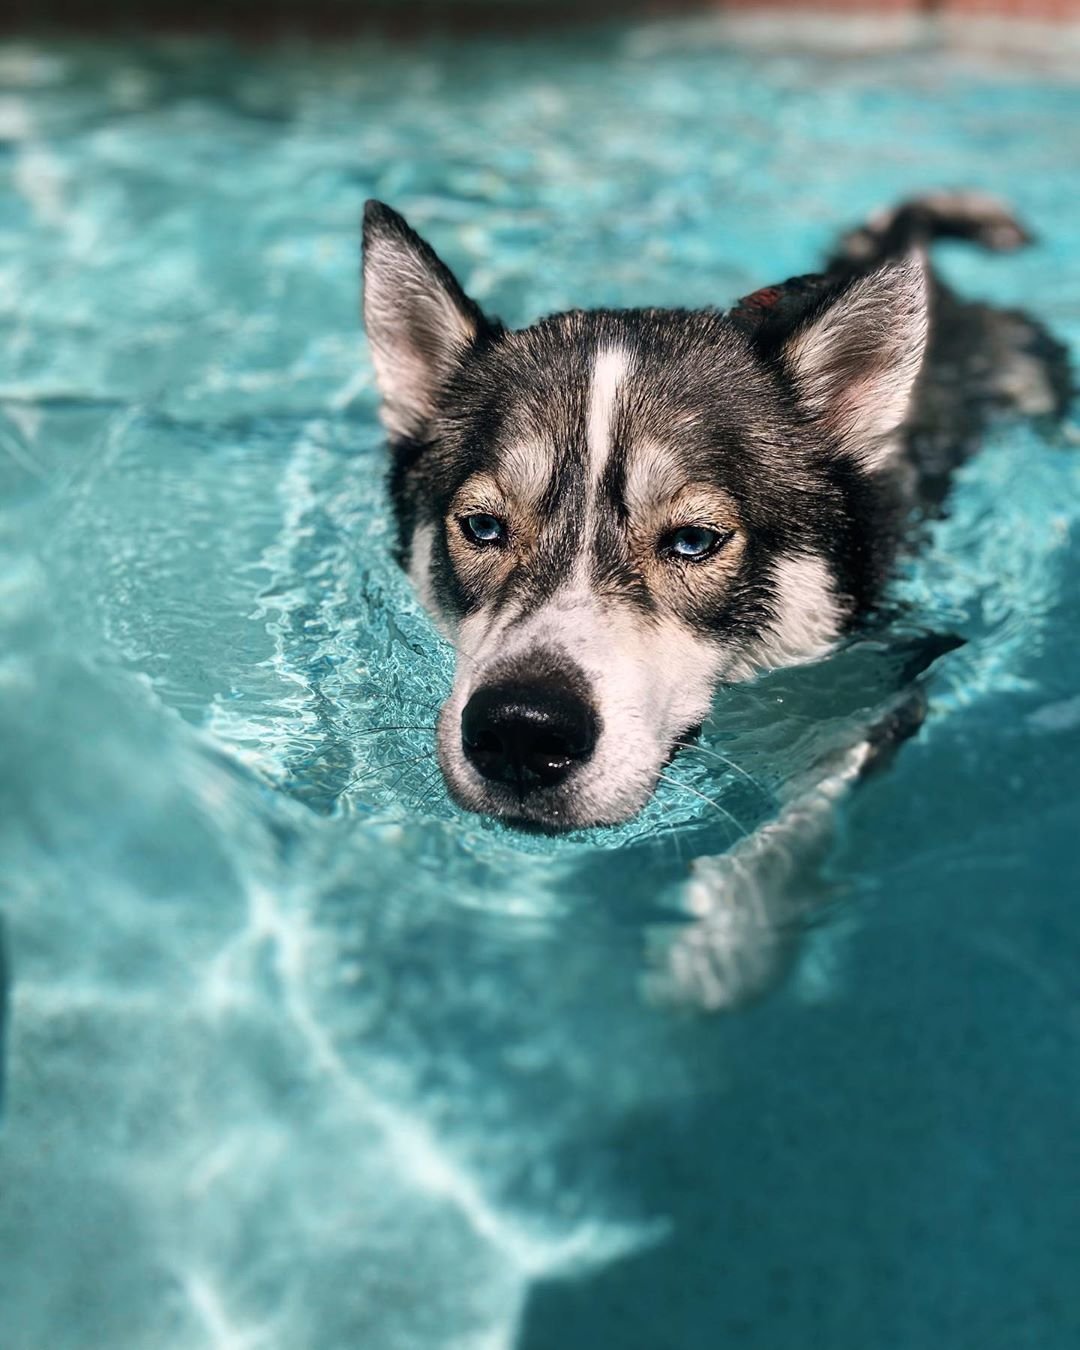 Perro nadando